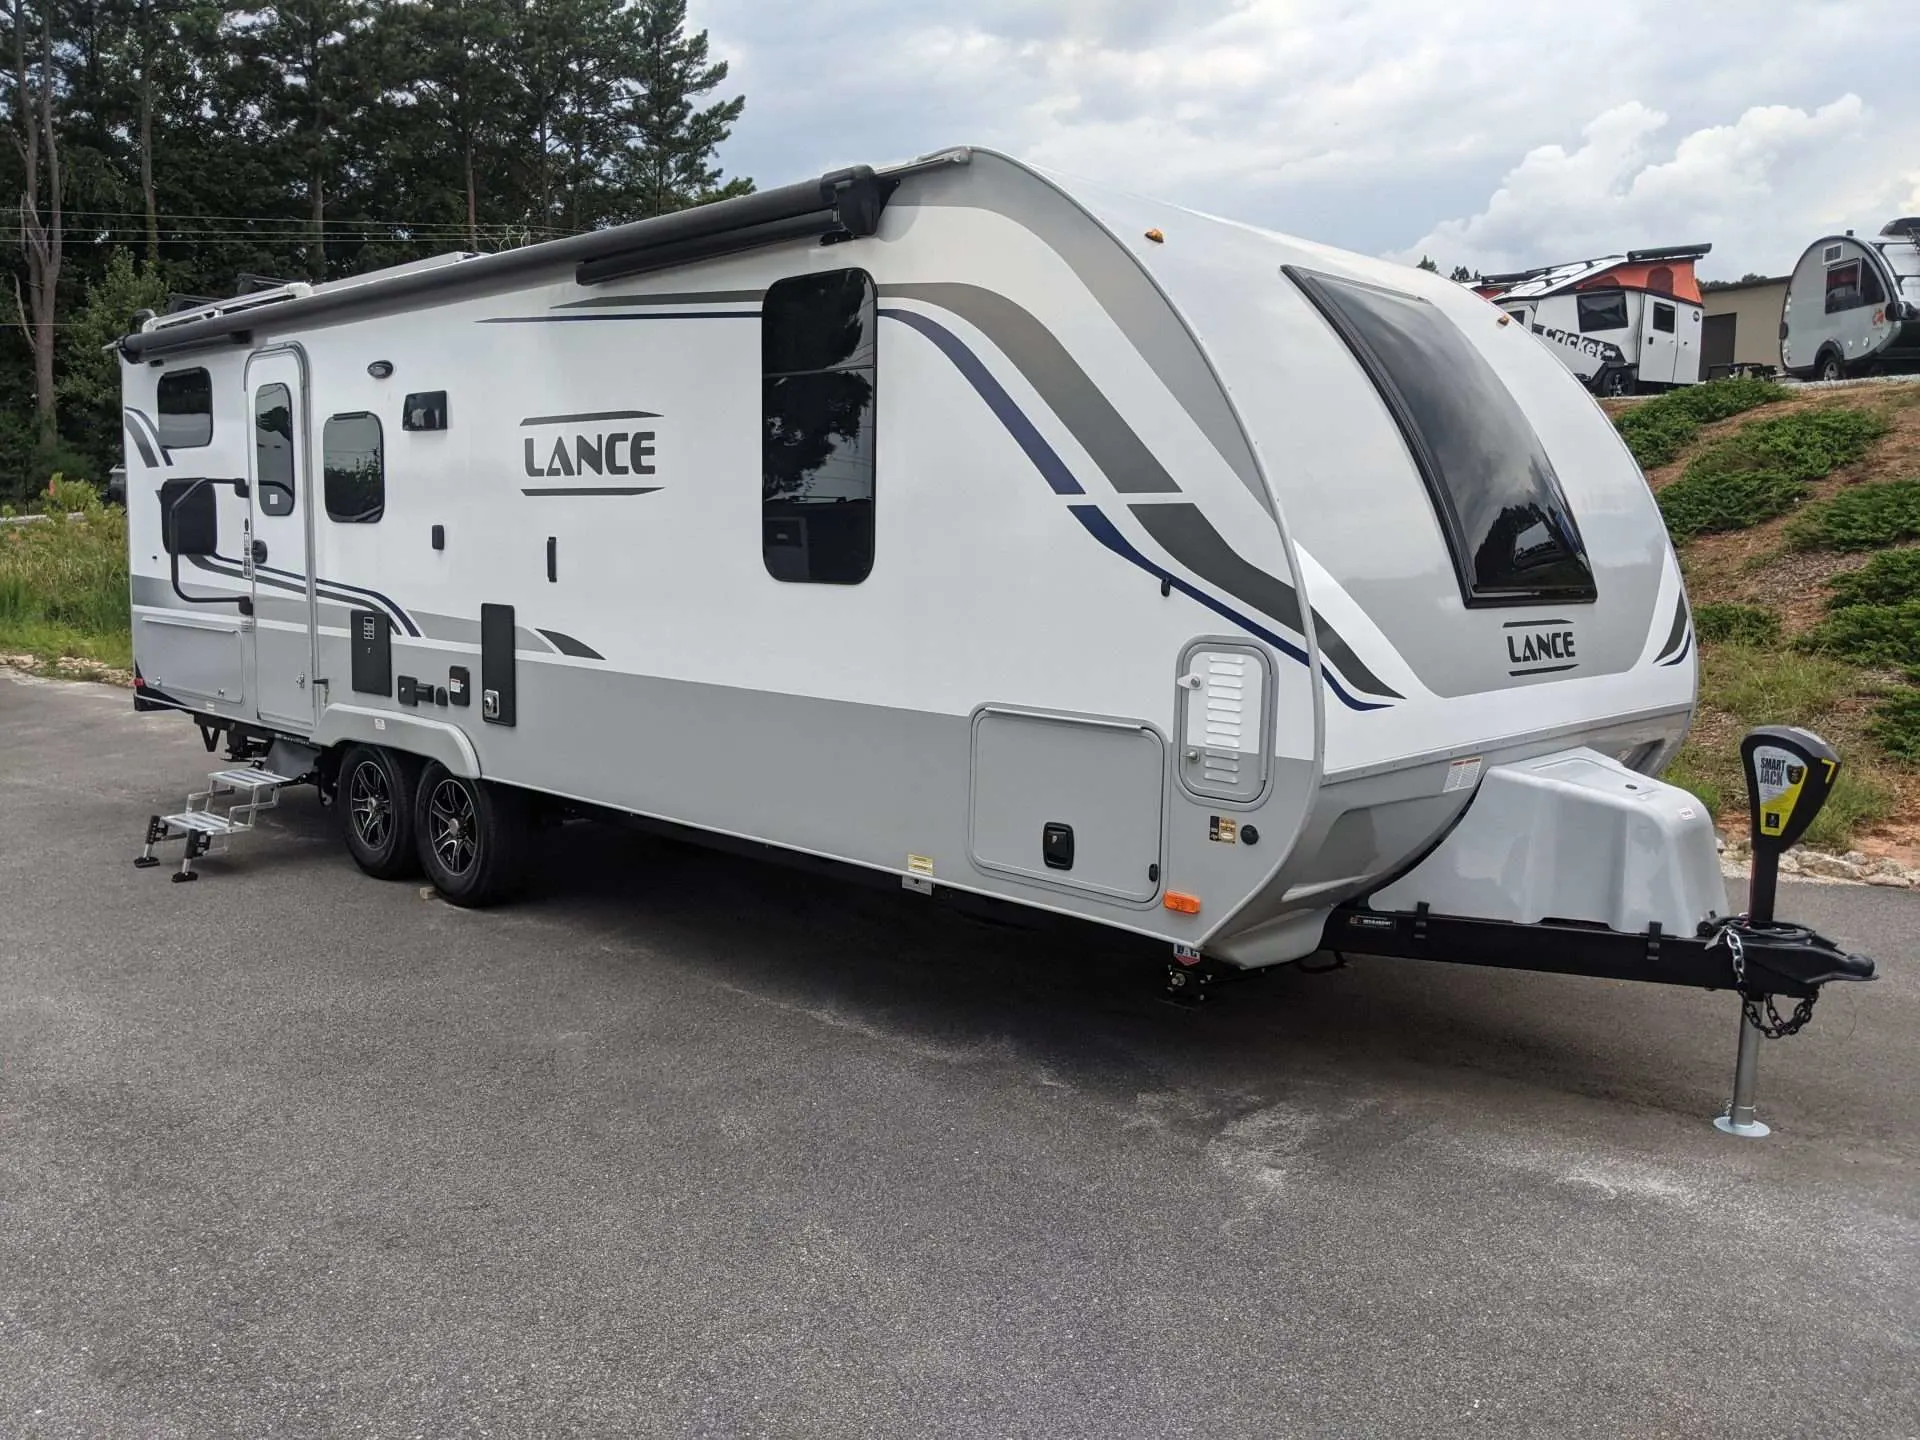 Lance travel trailer in parking lot